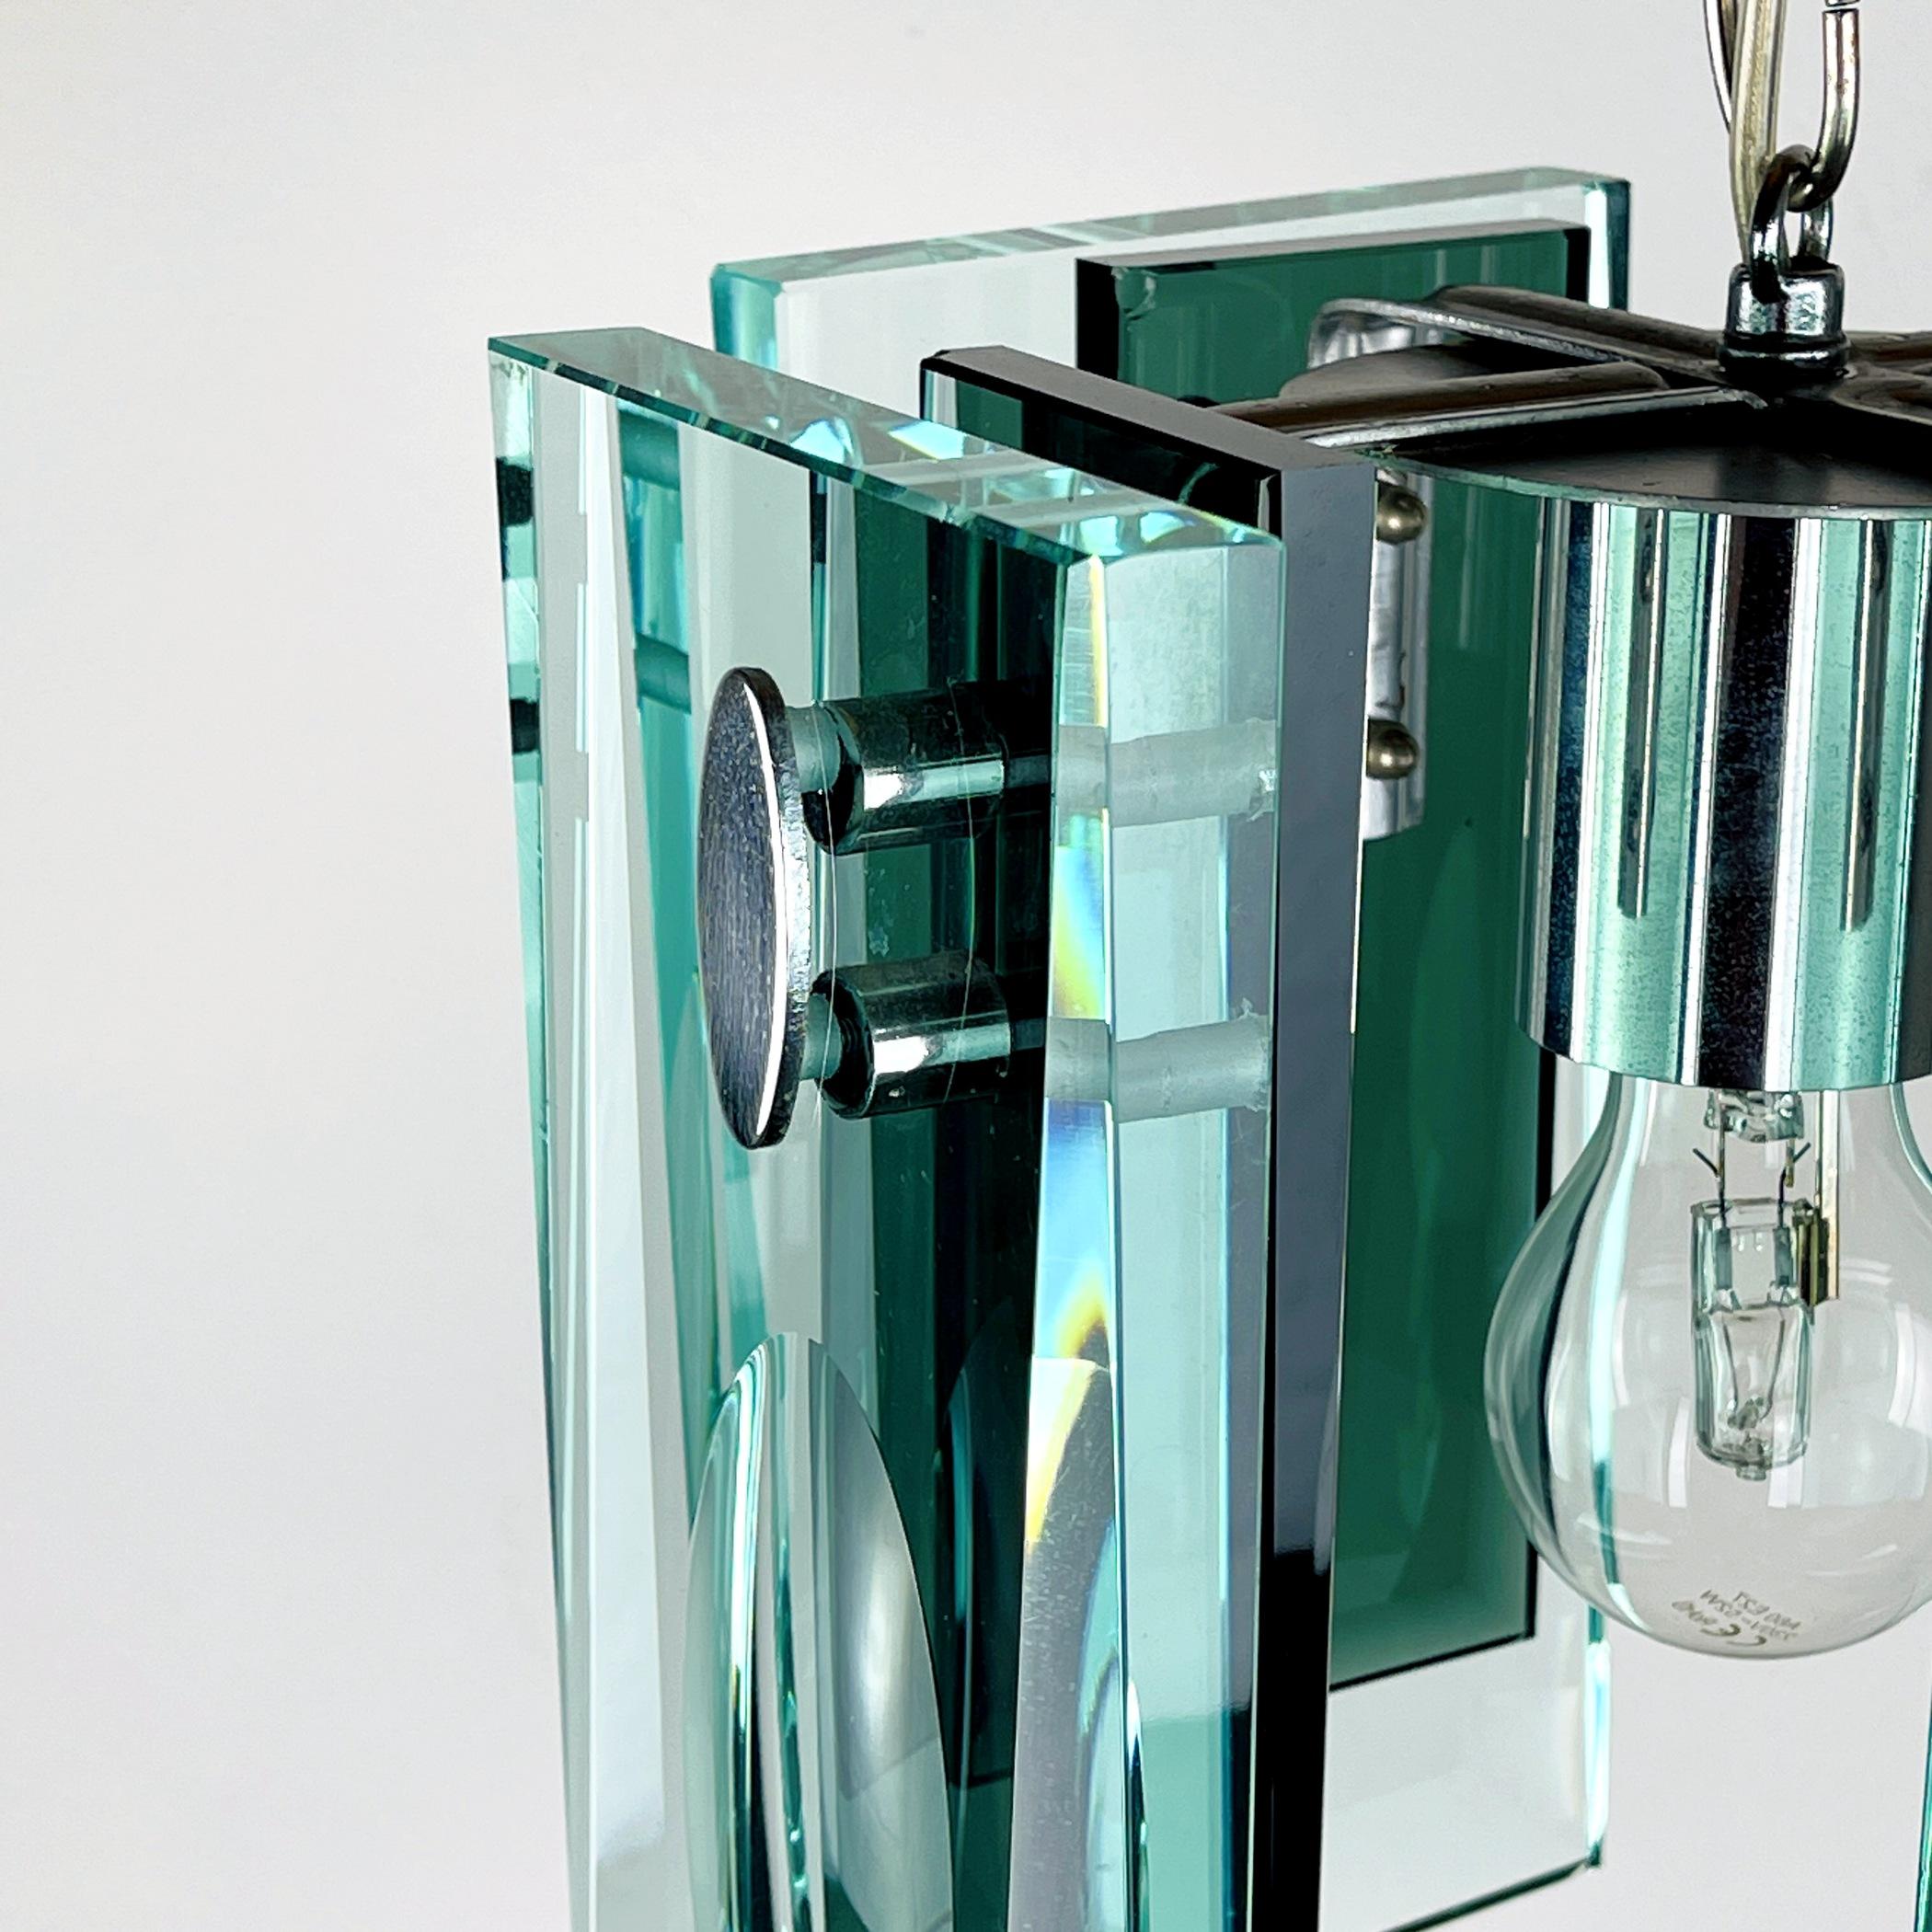 Rare Art Glass Pendant Lamp Italian Design by Fontana Arte Italy 70s For Sale 8